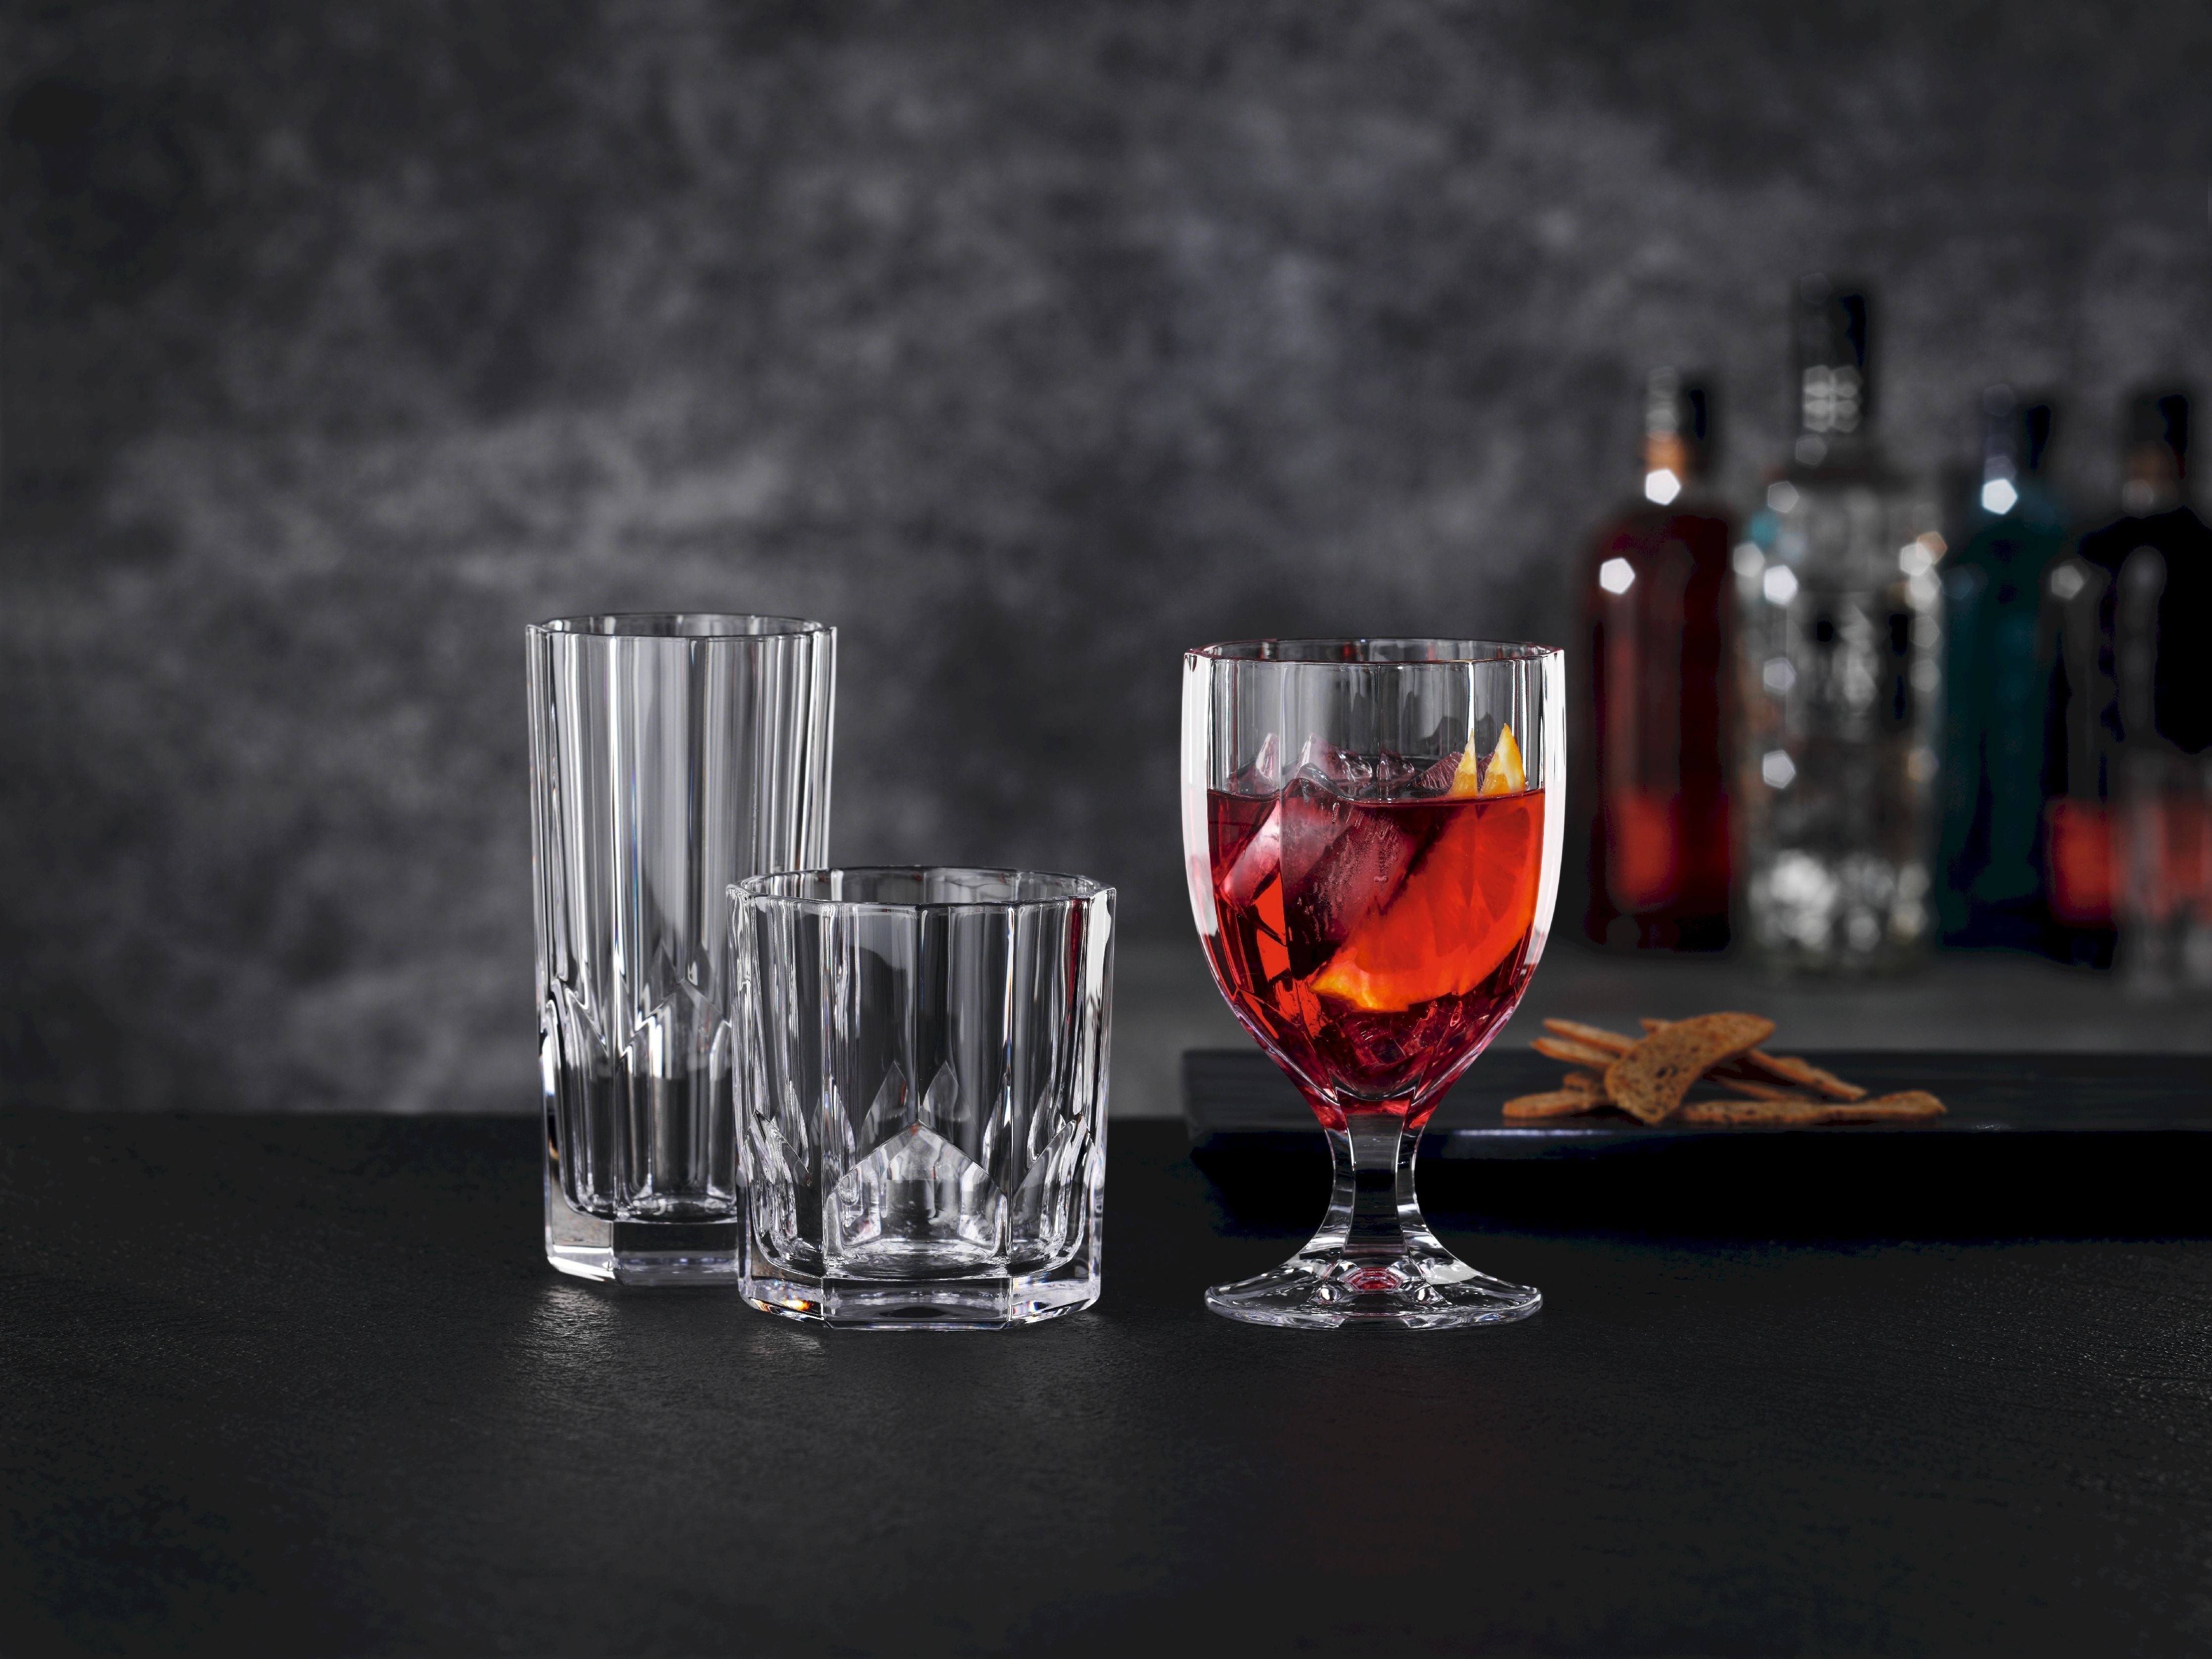 Nachtmann Aspen Whisky Glass 324 ml, 4 st.